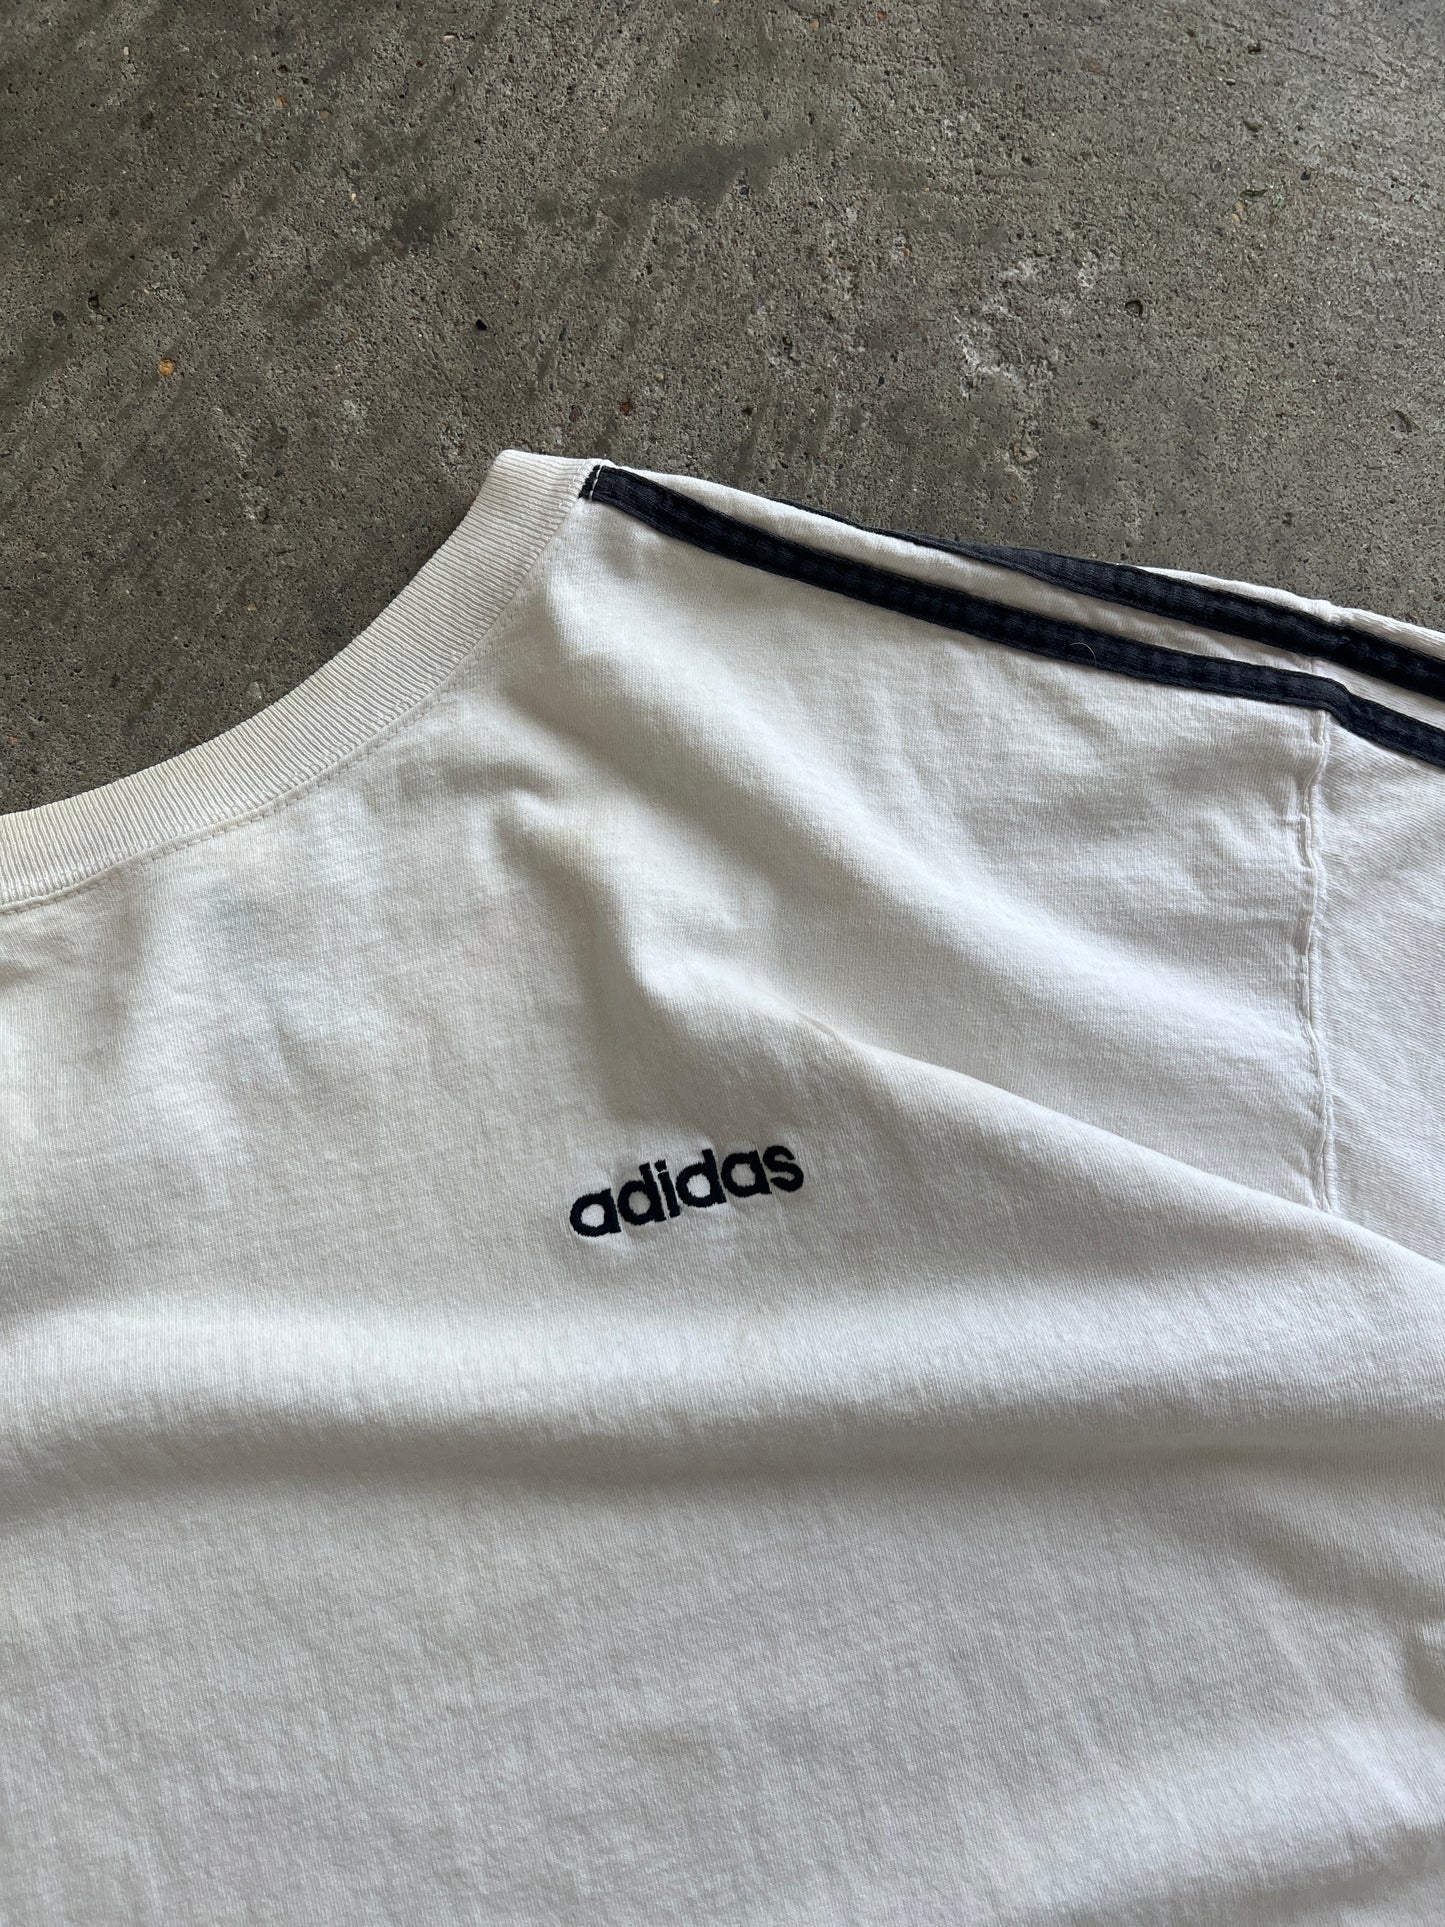 Vintage Embroidered Adidas Shirt - XXL